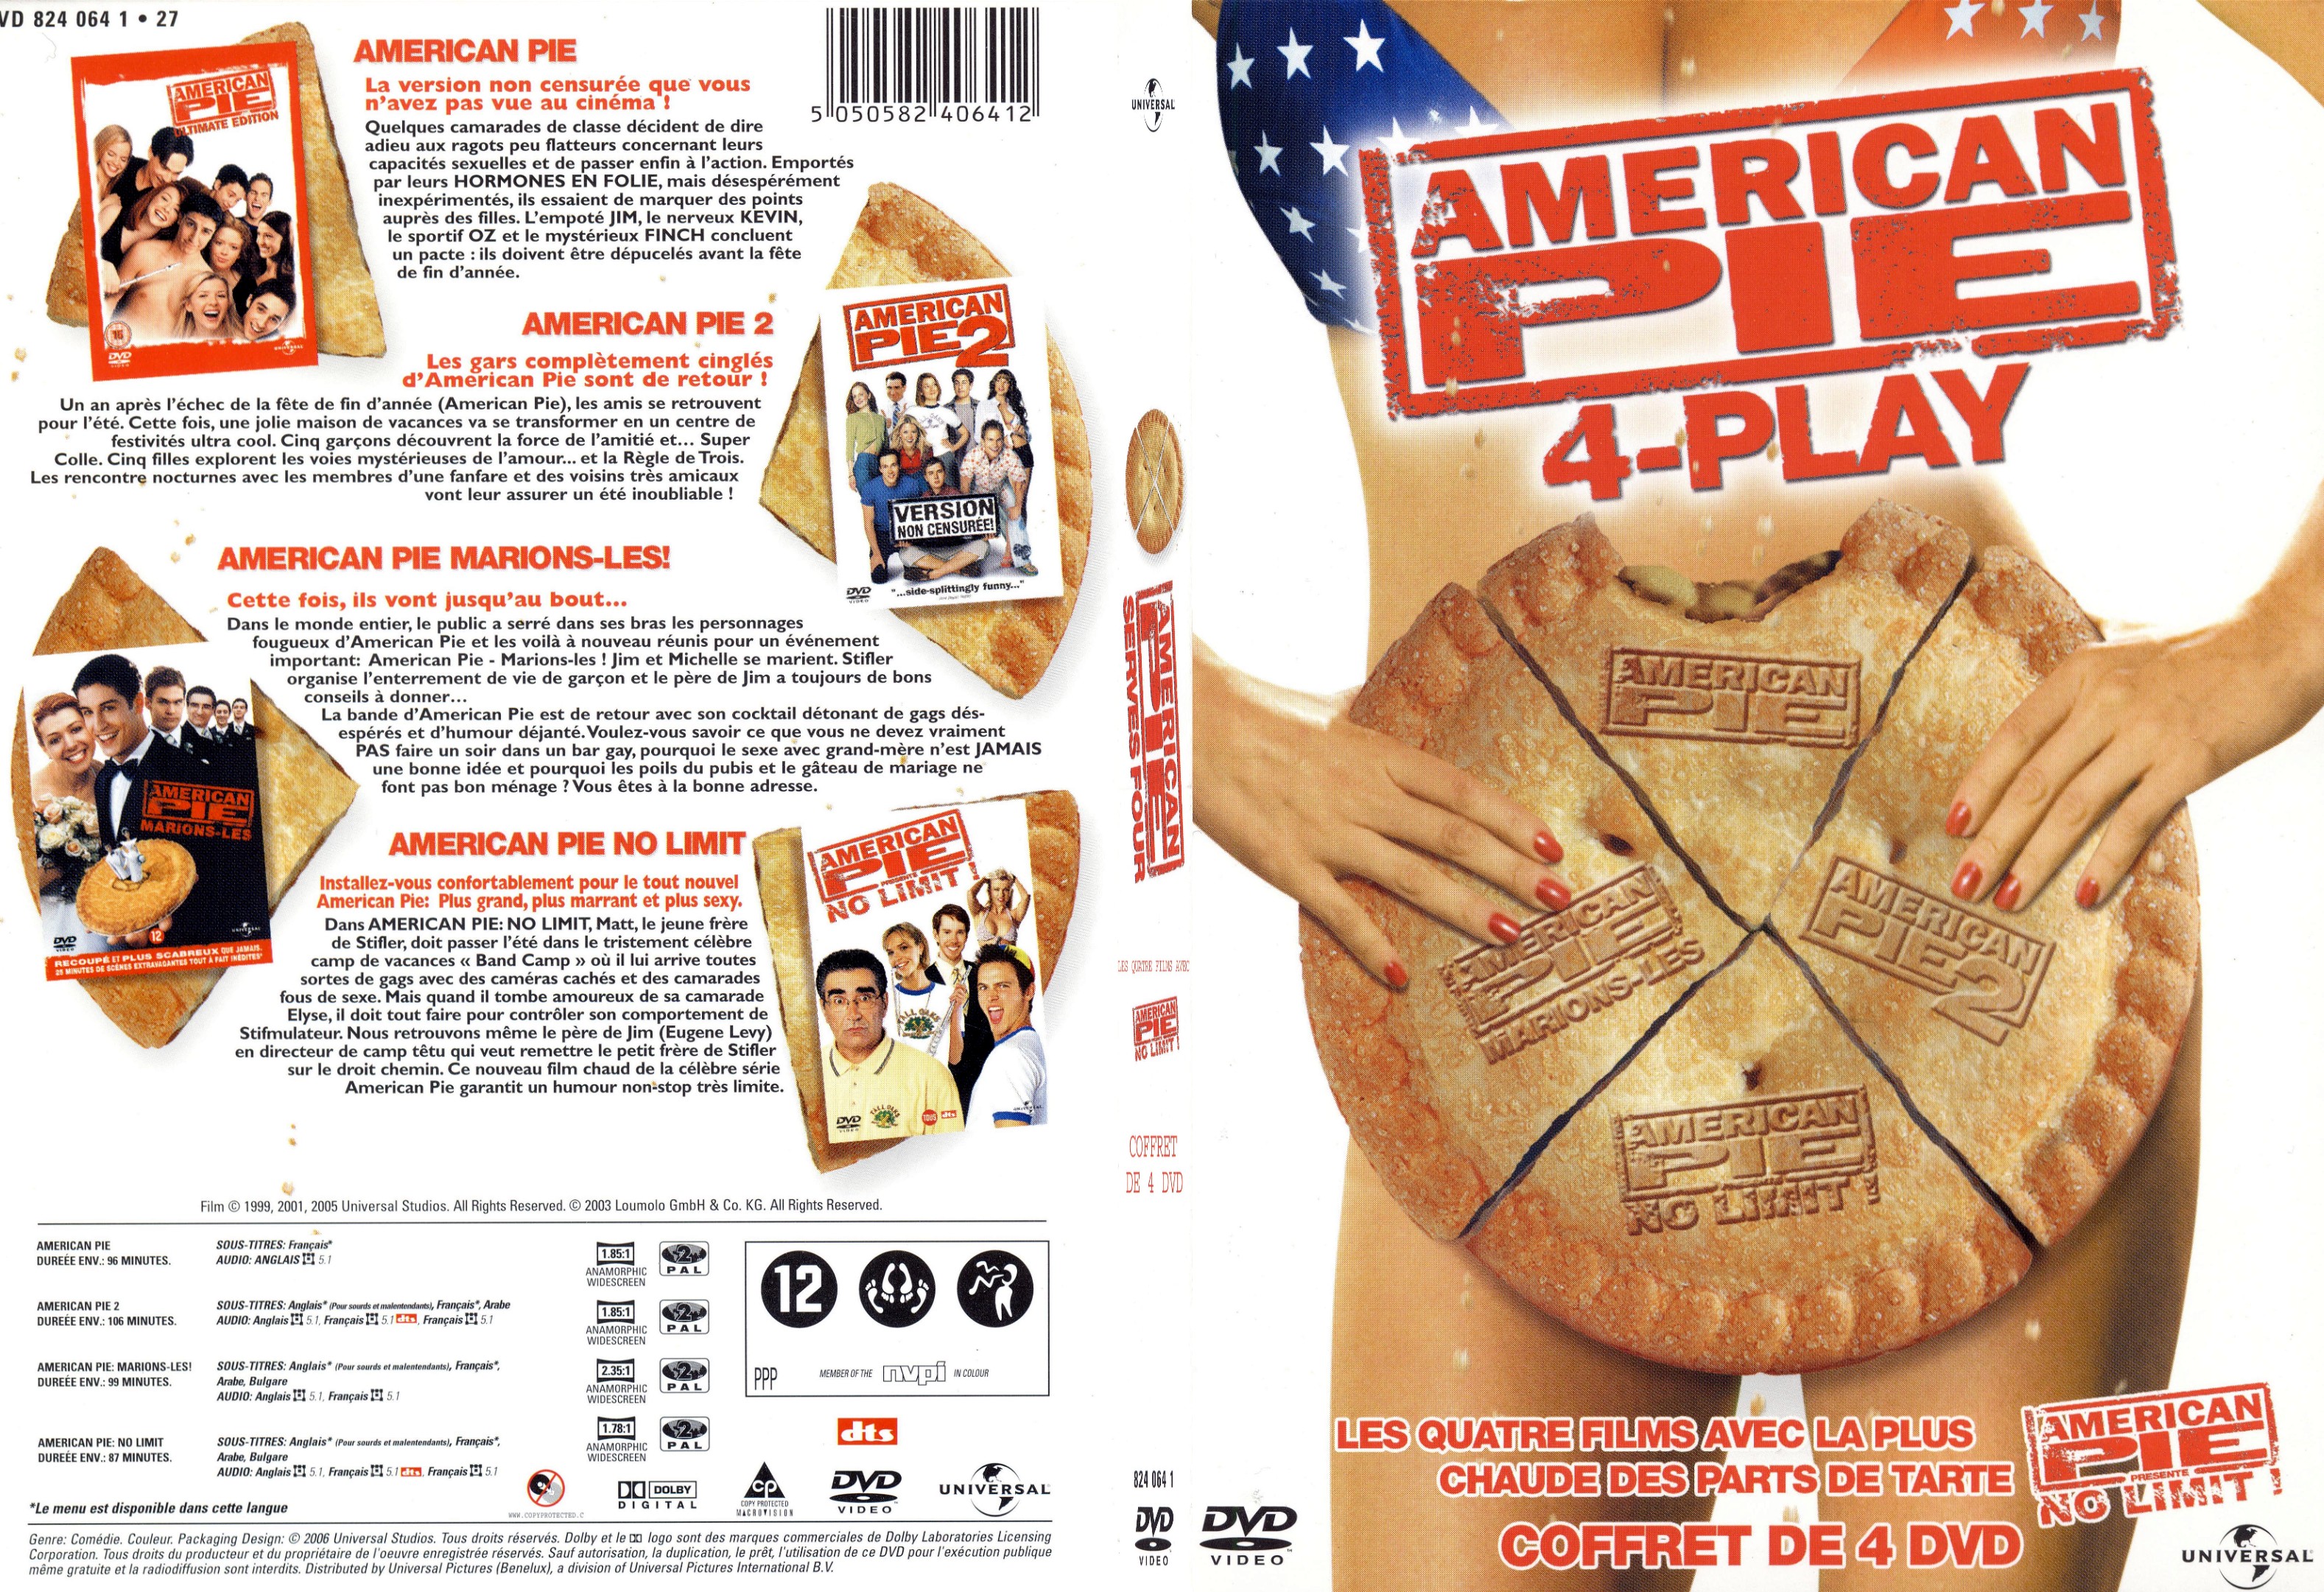 Jaquette DVD american pie COFFRET 4-play - SLIM